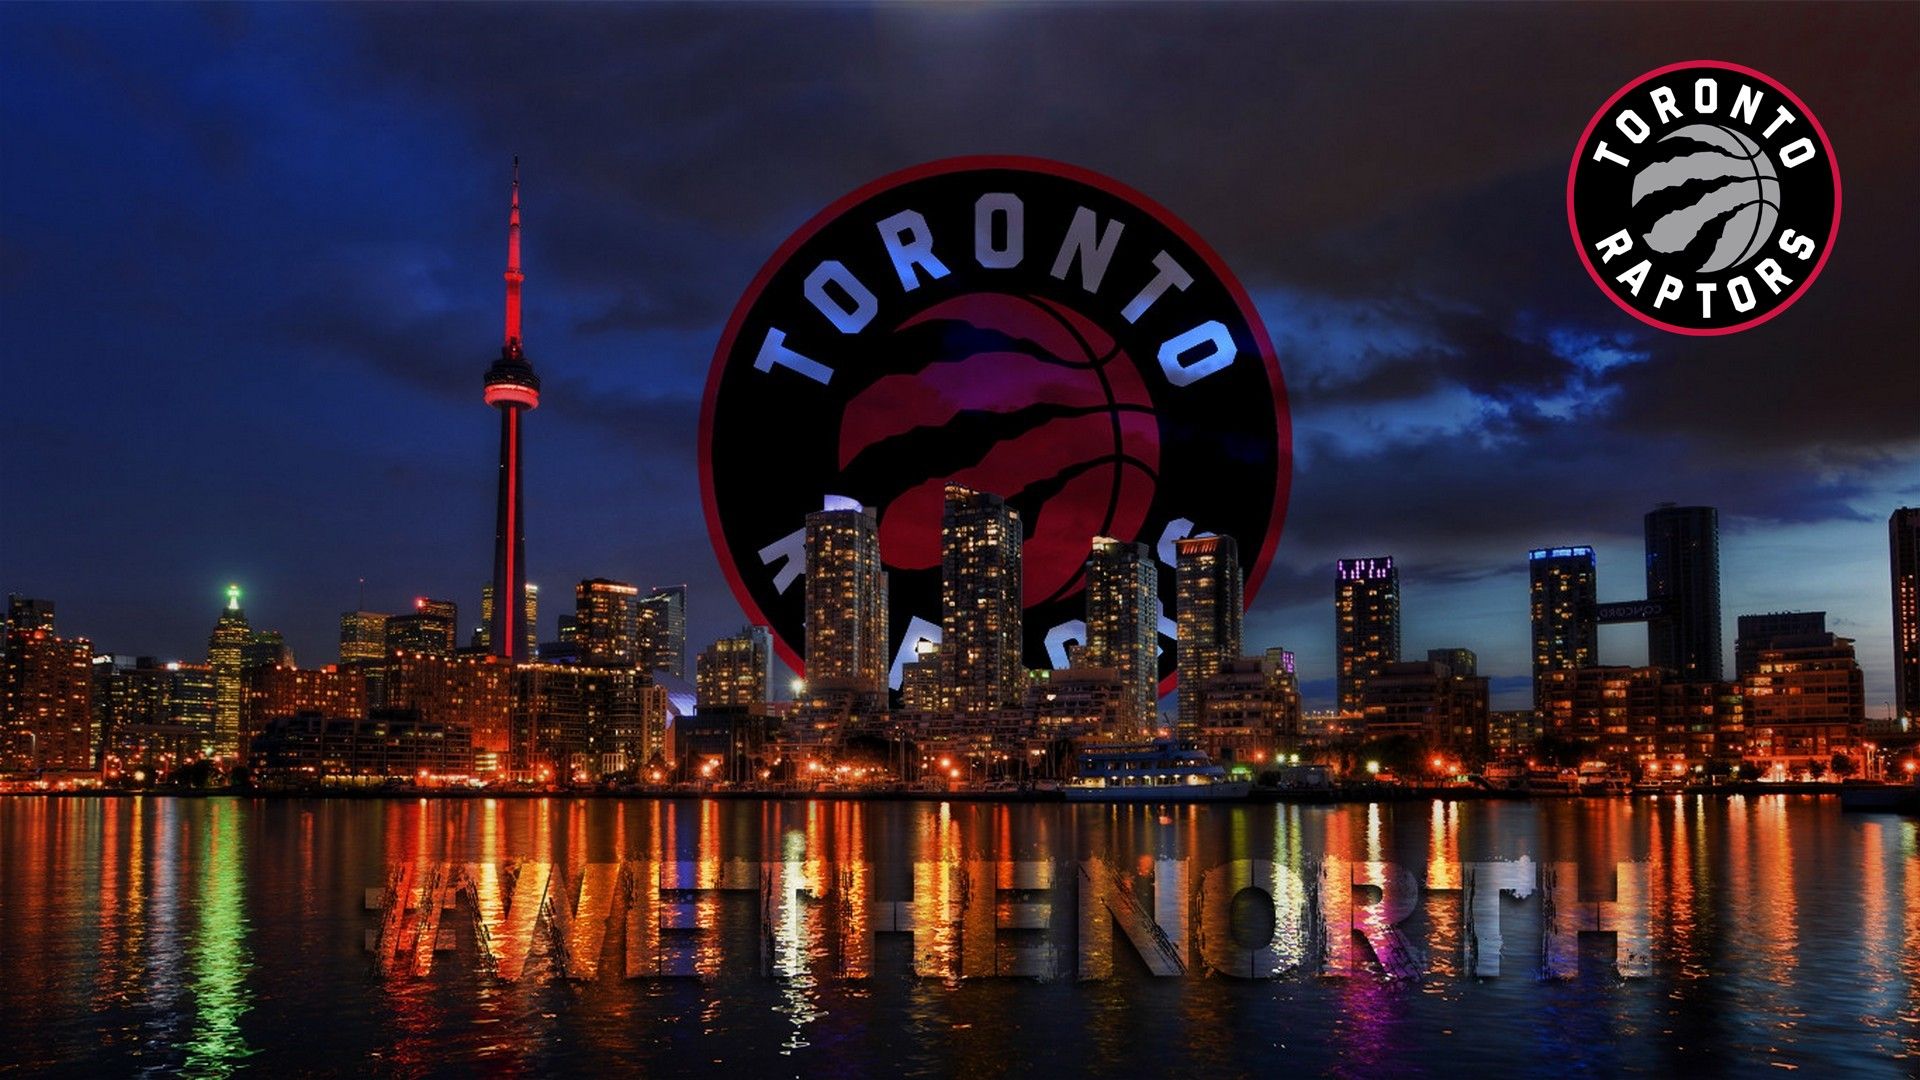 2019 NBA Champion Toronto Raptors Wallpaper by Lancetastic27 on DeviantArt